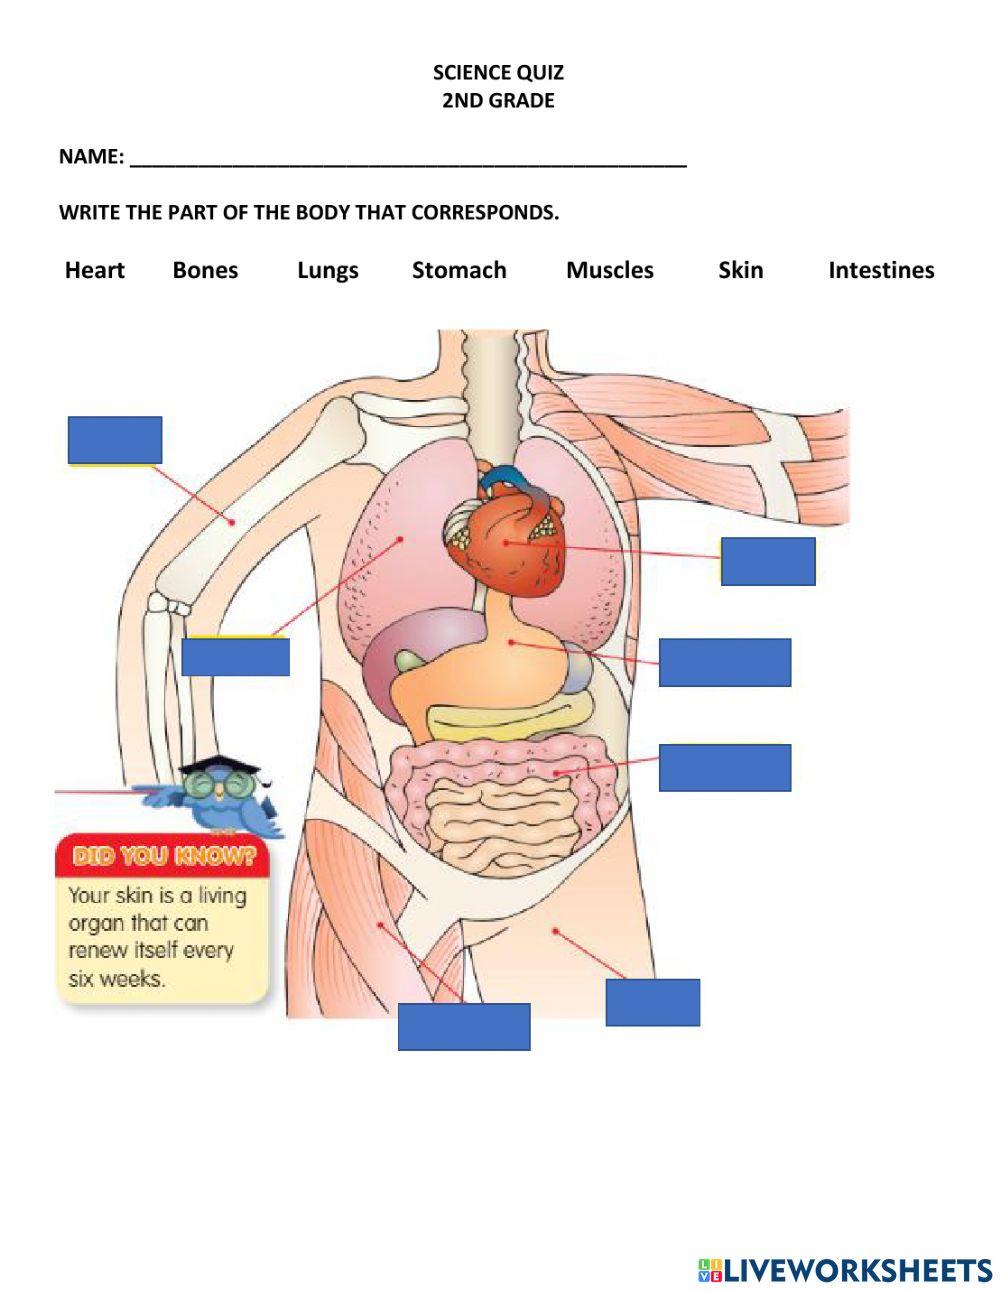 The organs